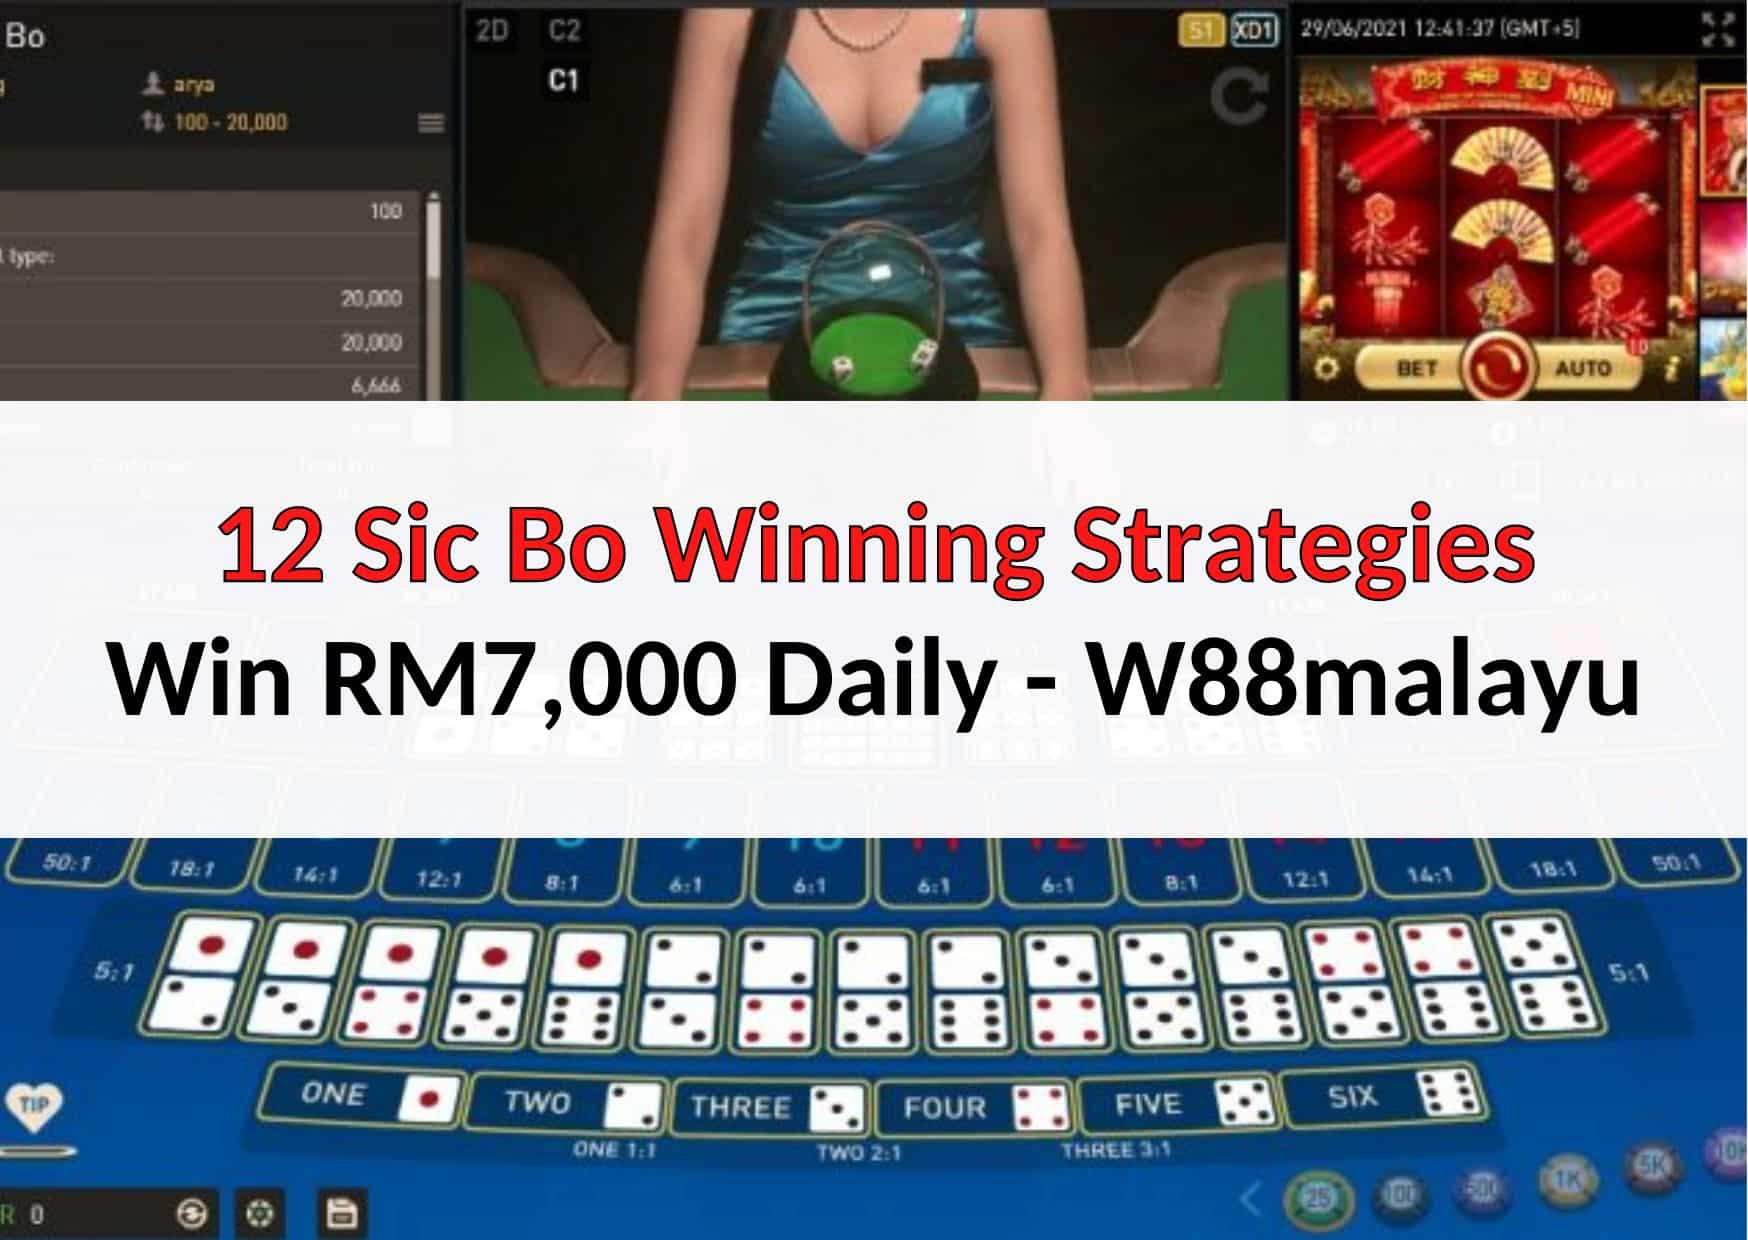 sic-bo-winning-strategies-1